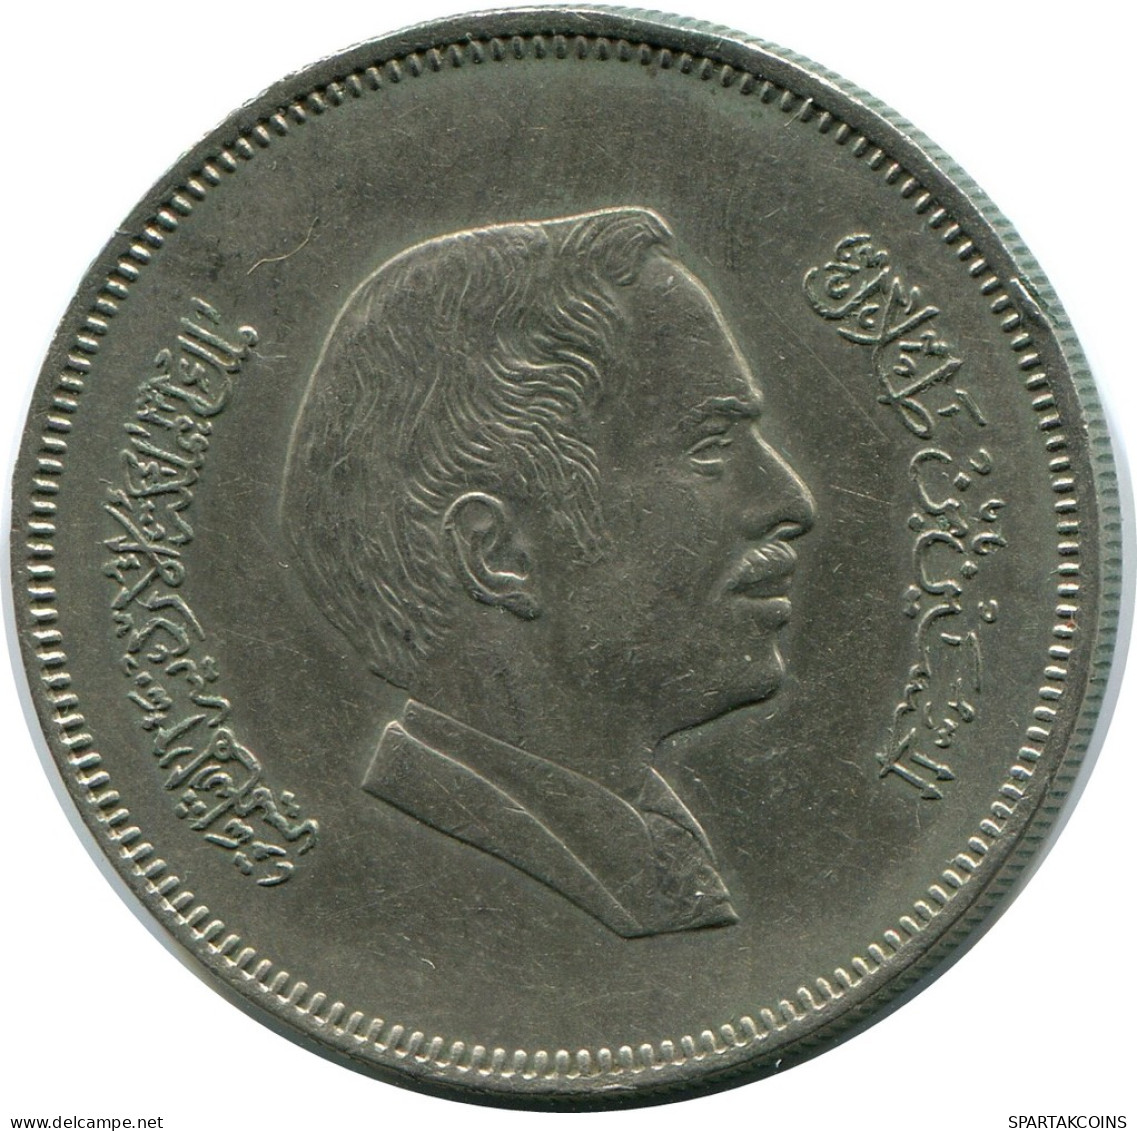 ½ DIRHAM / 50 FILS 1978 JORDAN Coin #AP074.U - Jordanien